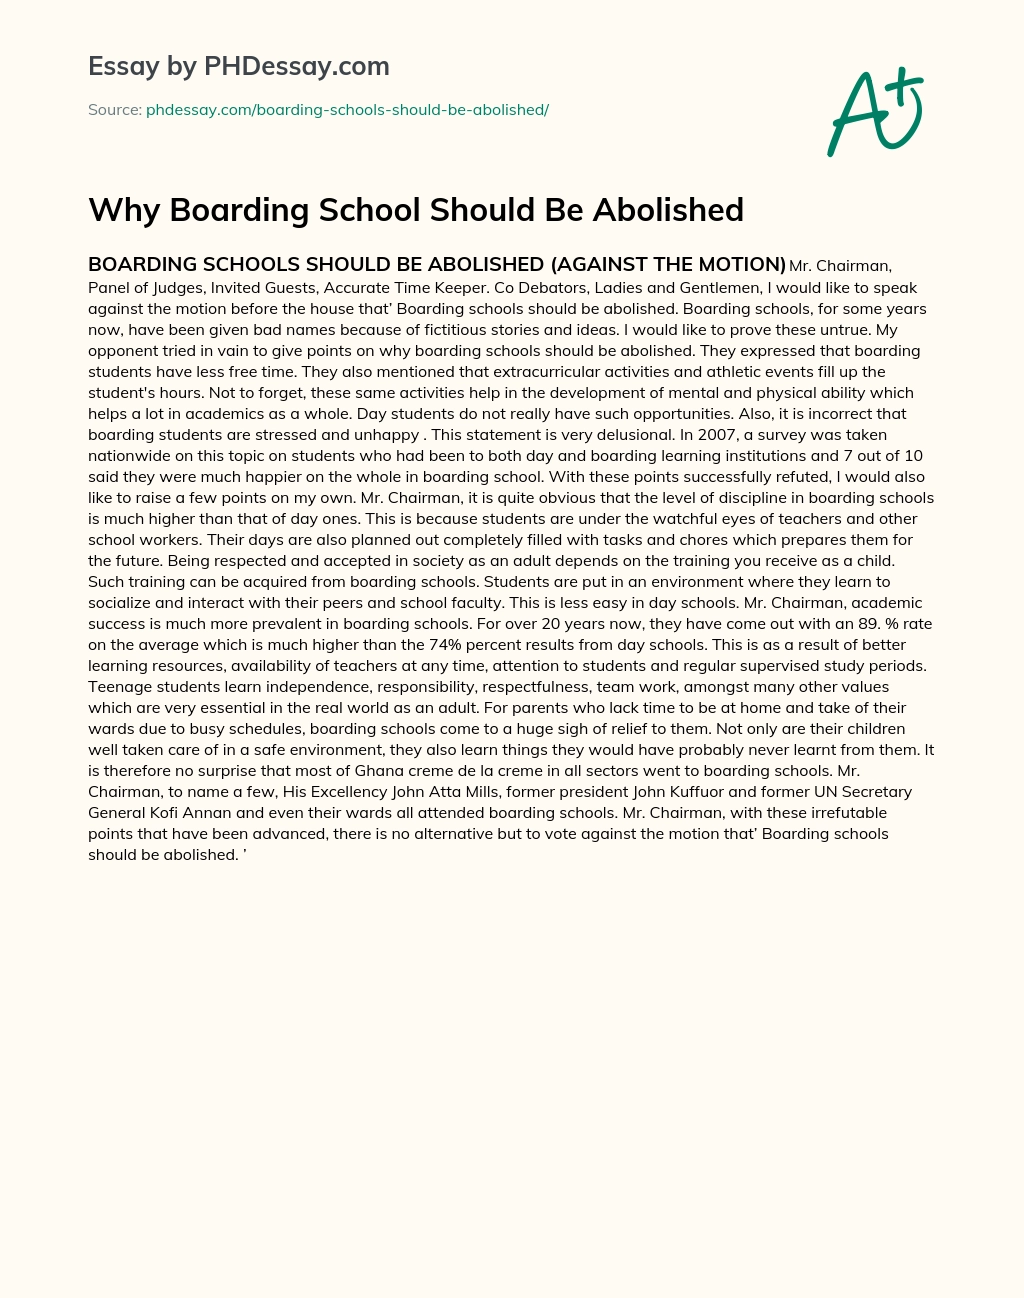 Why Boarding School Should Be Abolished essay